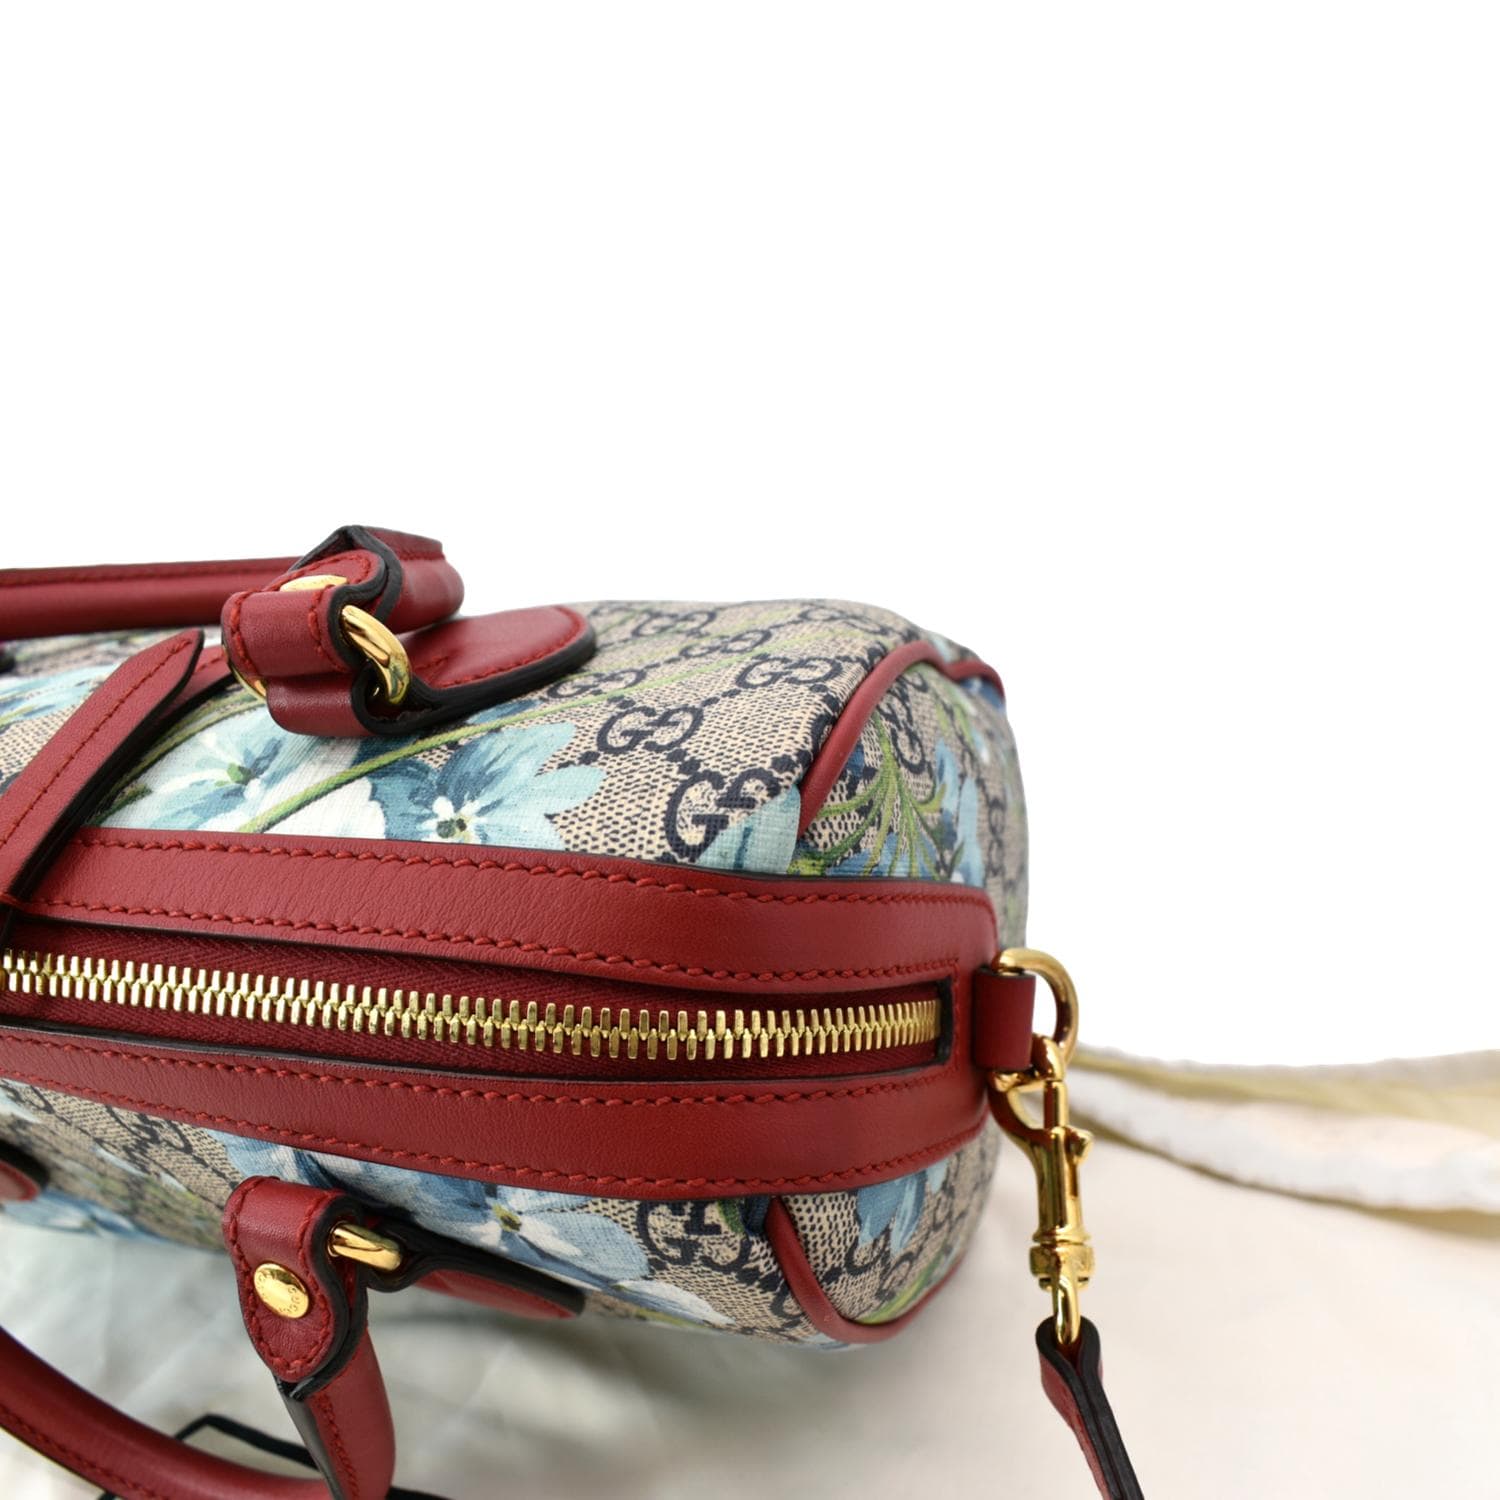 Gucci Bloom 😍 in 2023  Gucci pouch bag, Gucci floral bag, Gucci